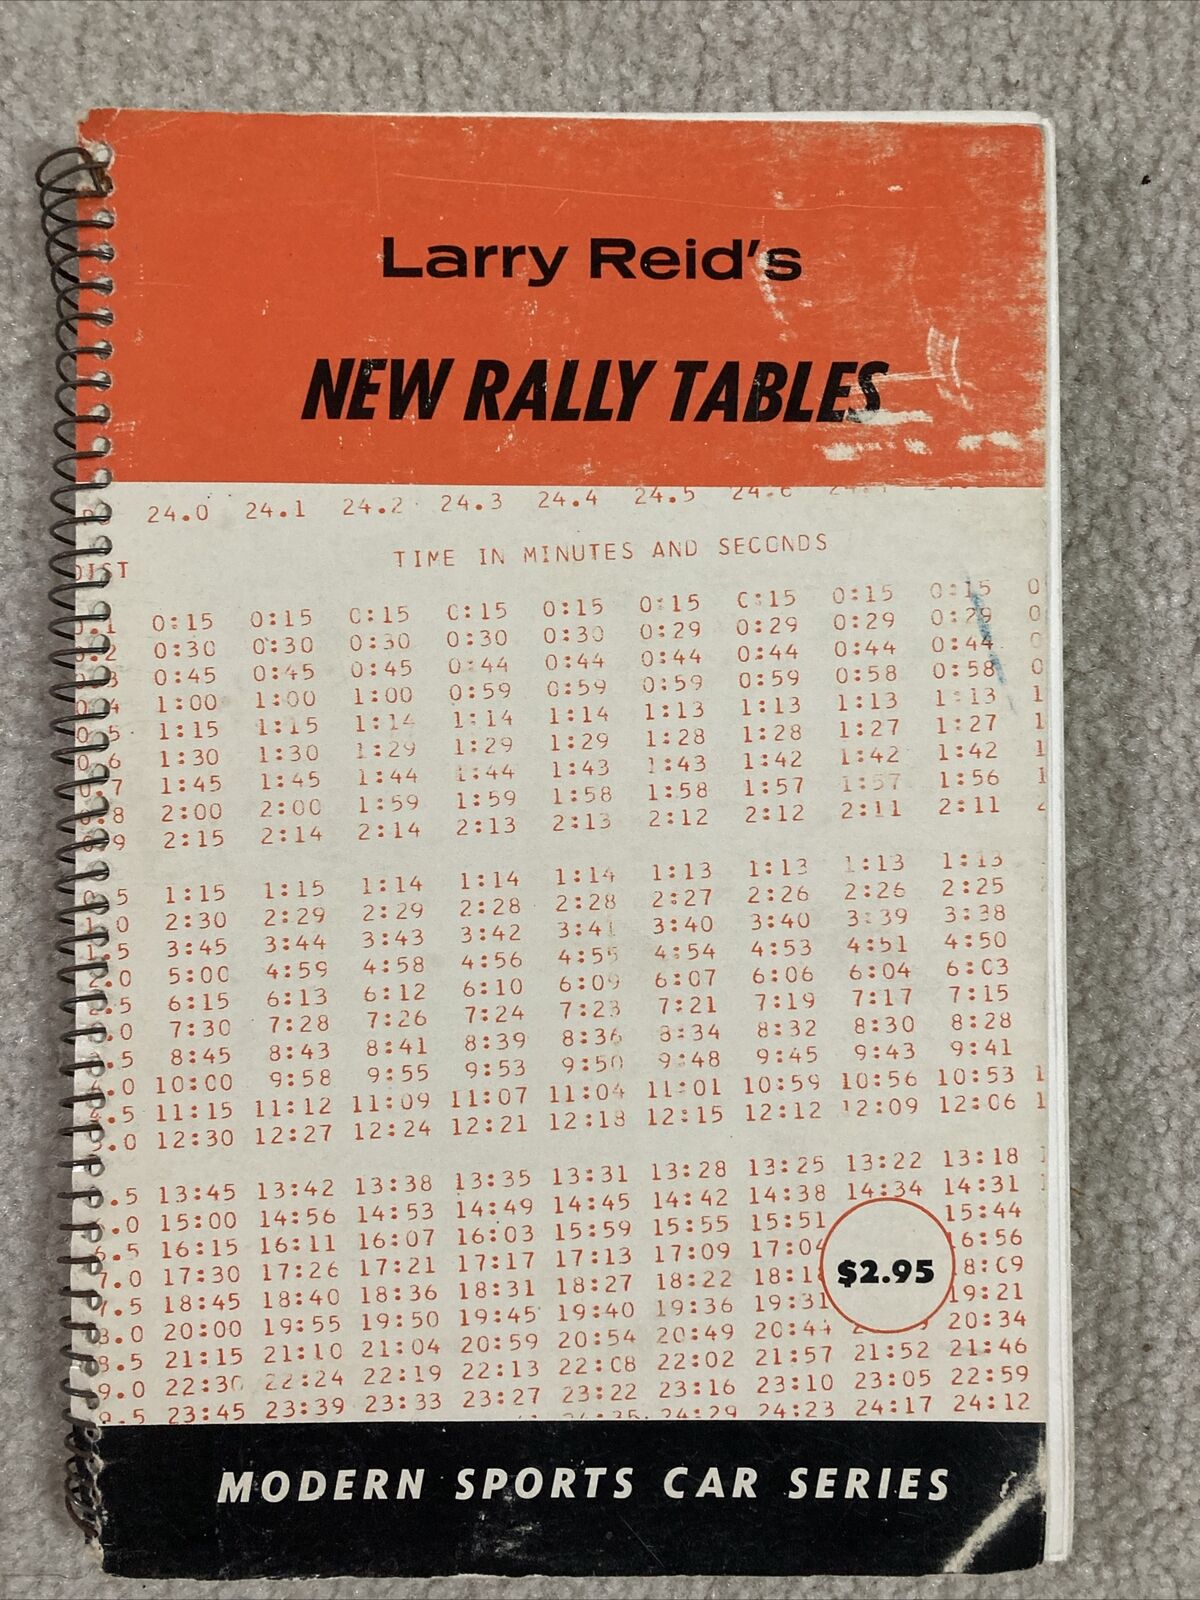 Larry Reid’s New Rally Tables